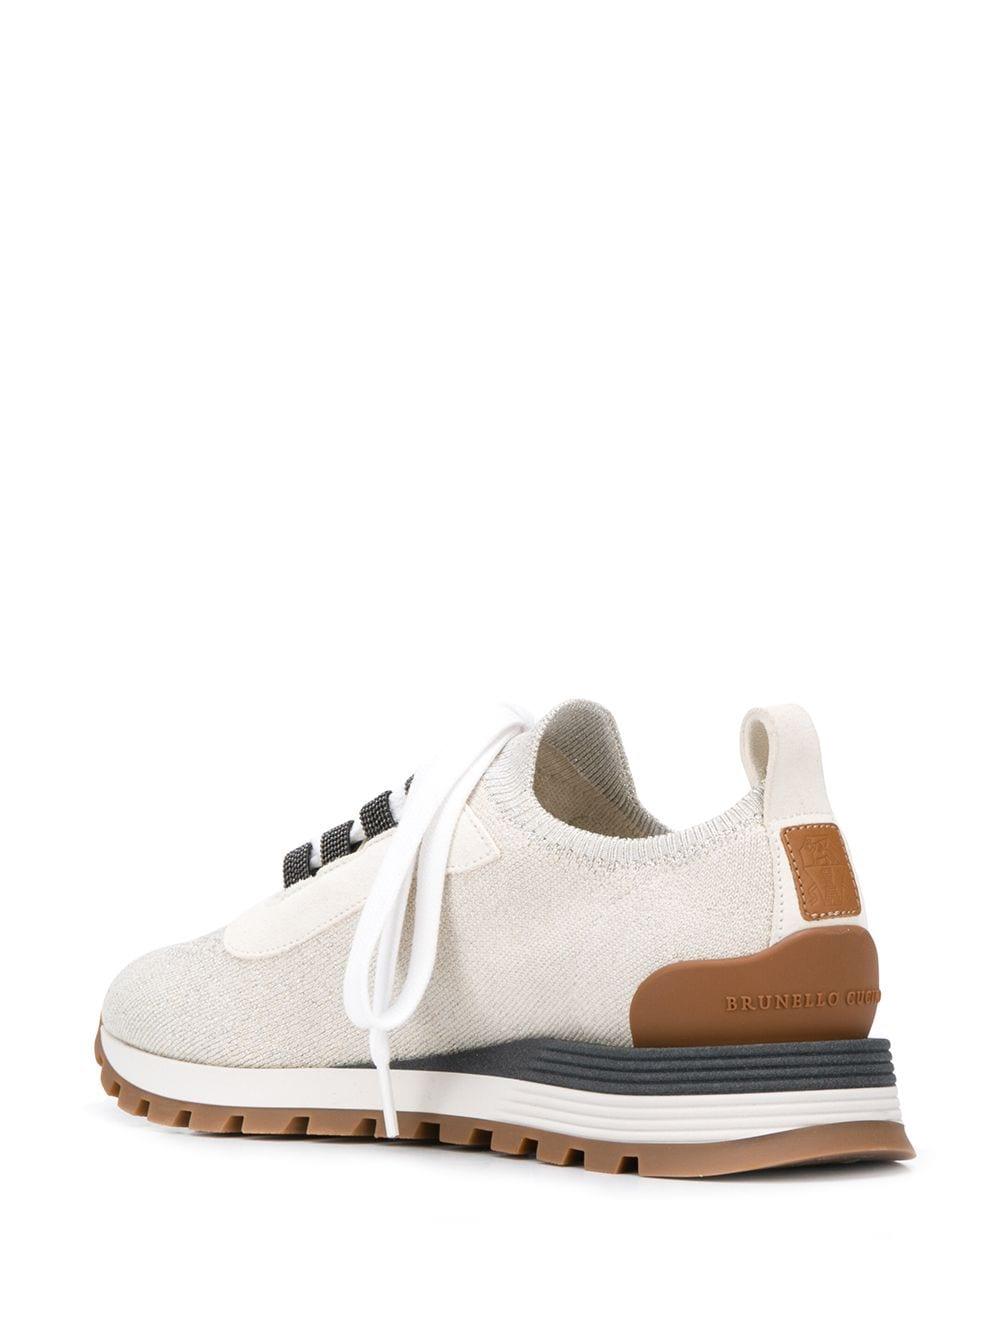 Brunello Cucinelli Low Top Sock Sneakers in White - Lyst